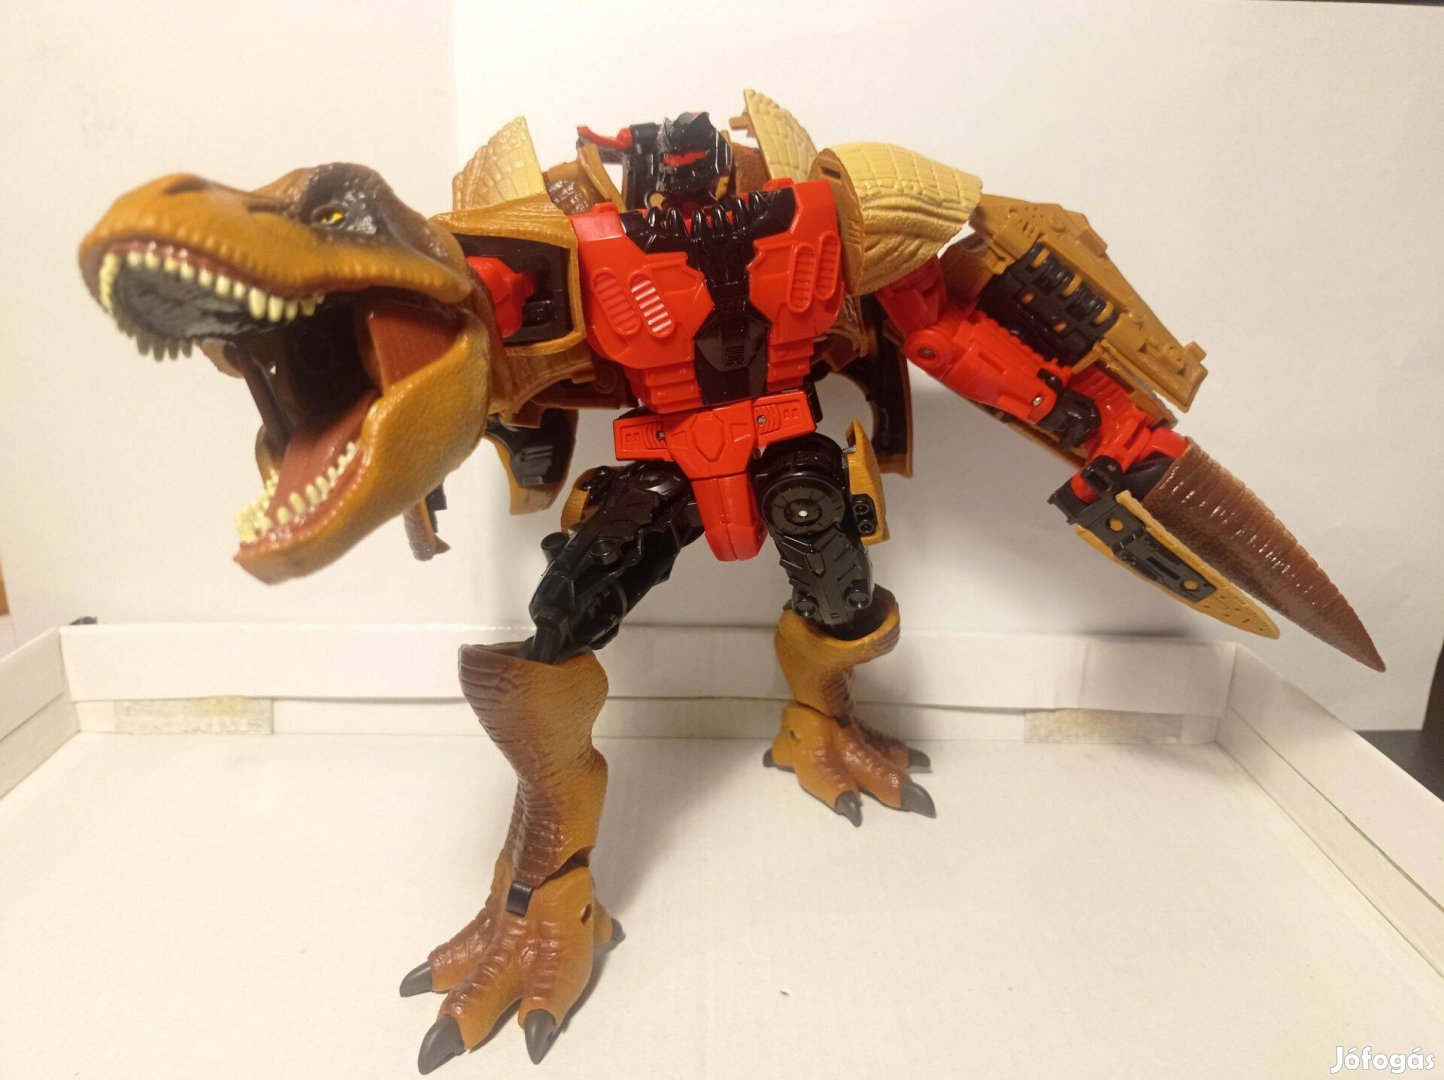 Transformers x Jurassic Park crossover Tyrannocon figura